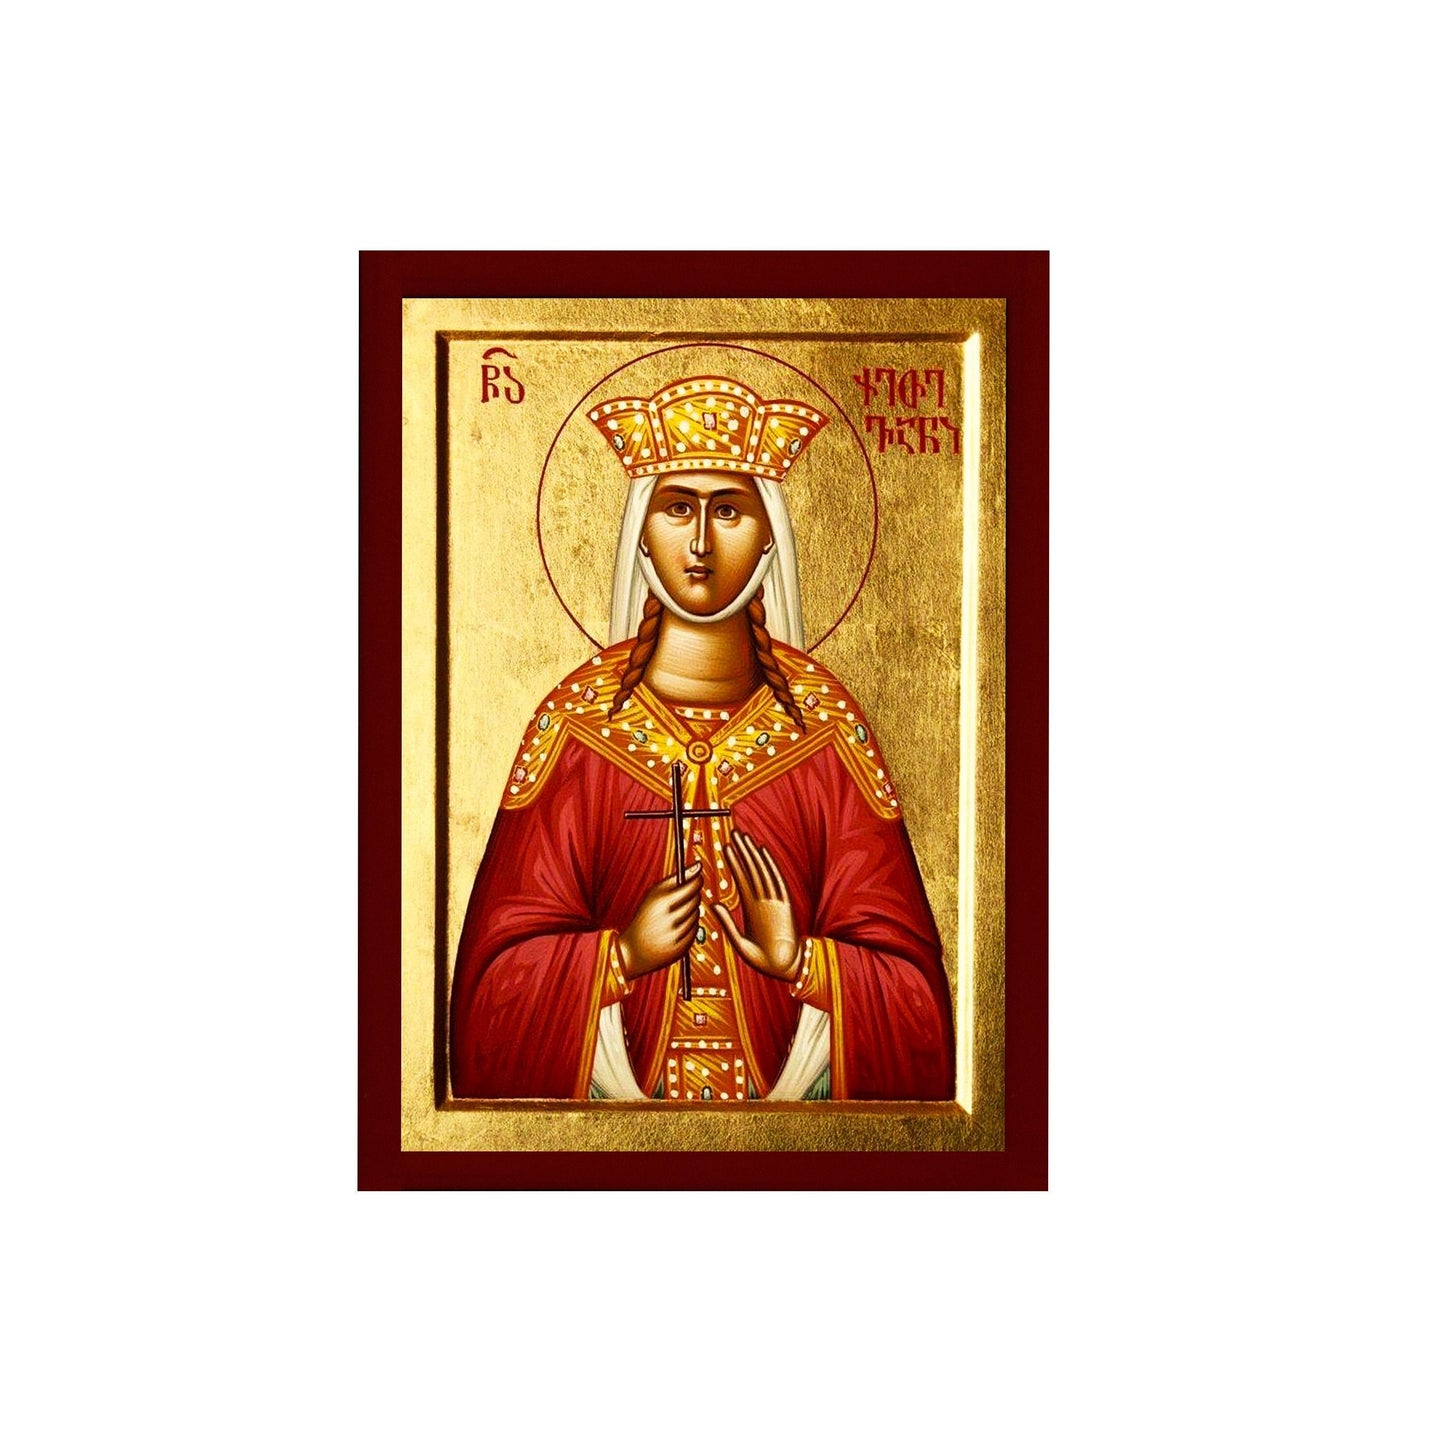 Saint Ketevan icon, Handmade Greek Orthodox icon of St Ketevan of Georgia, Byzantine art wall hanging wood plaque, religious decor TheHolyArt